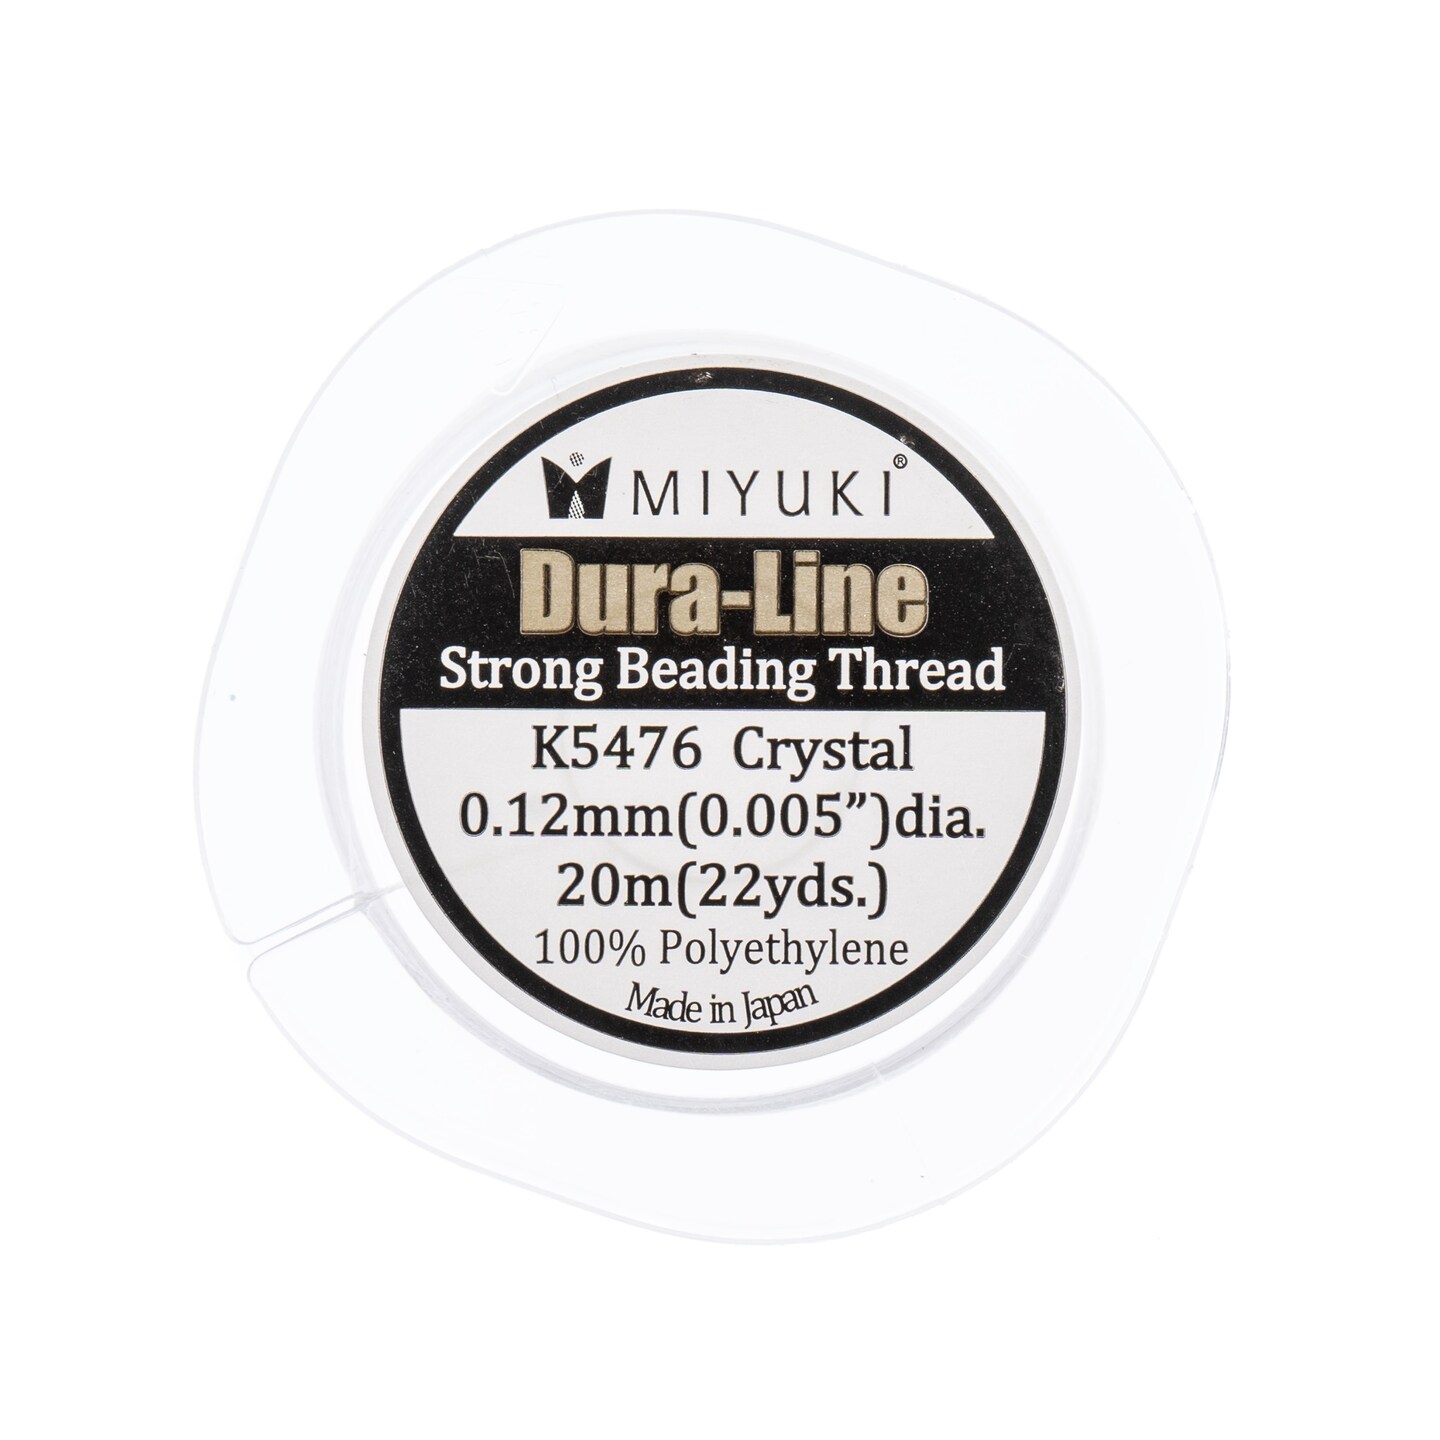 Miyuki Dura-Line 0.12mm Strong Beading Thread, 20m